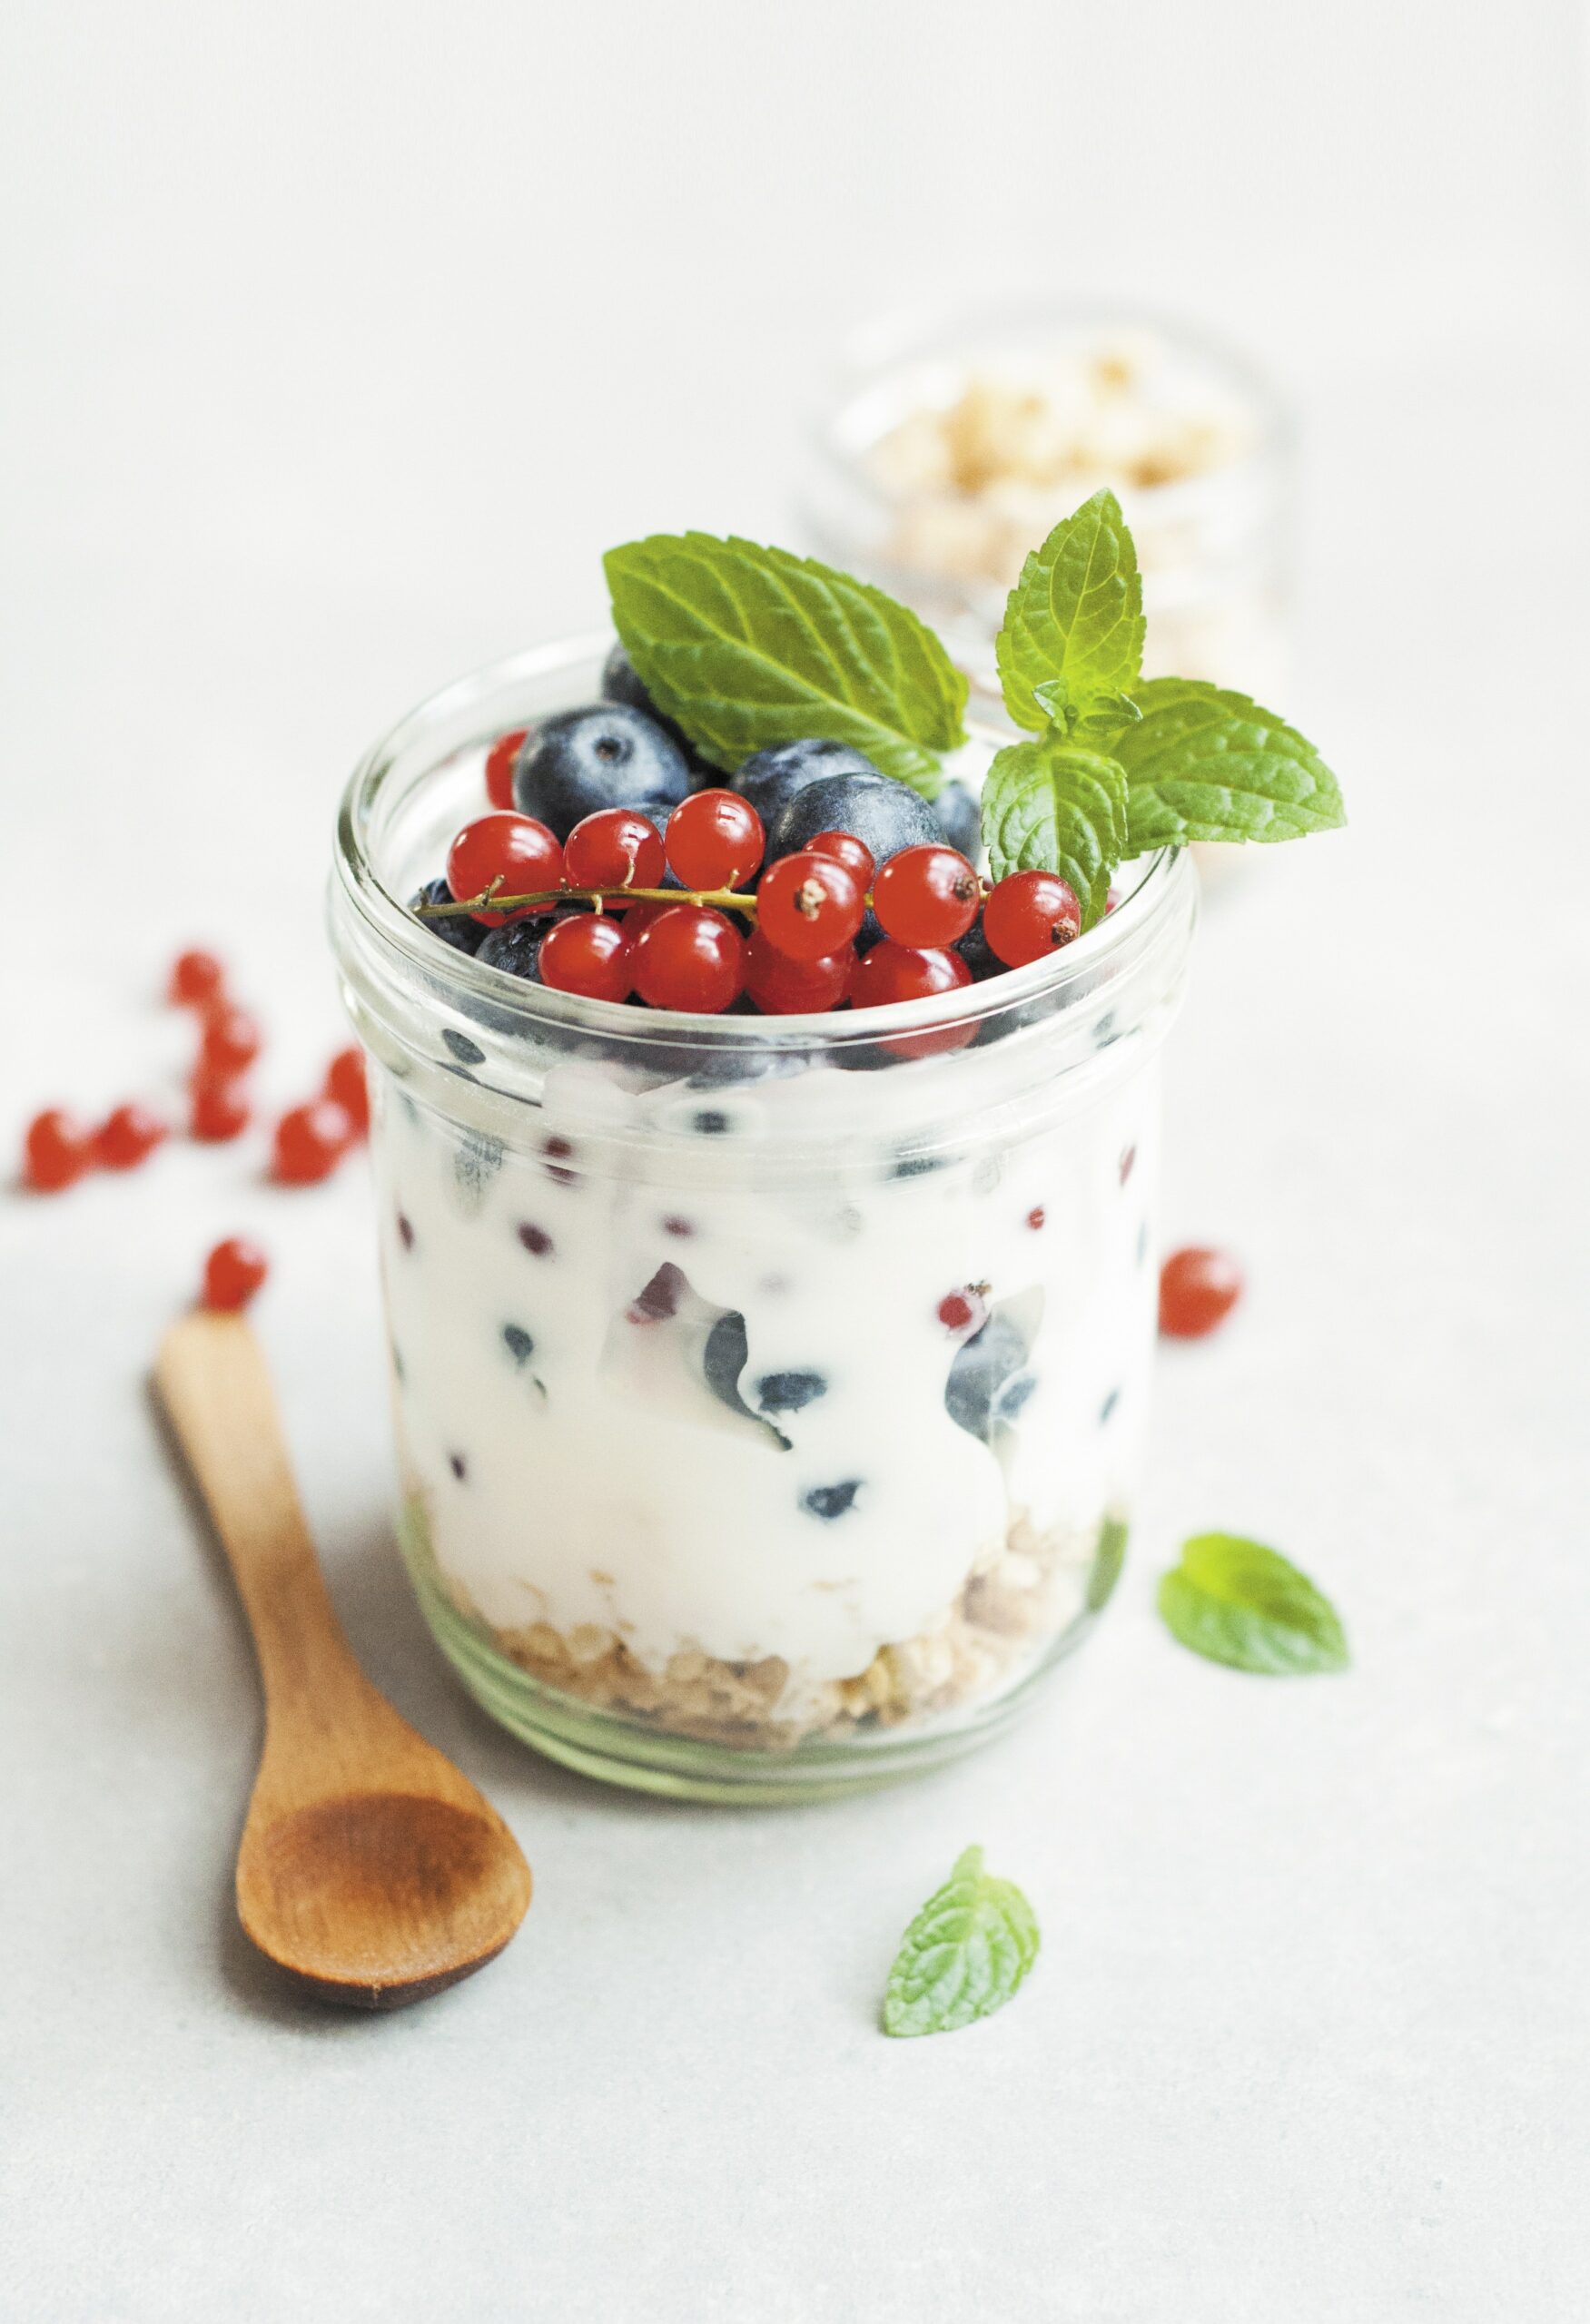 Is Habib Yoghurt Good for Weight Loss?